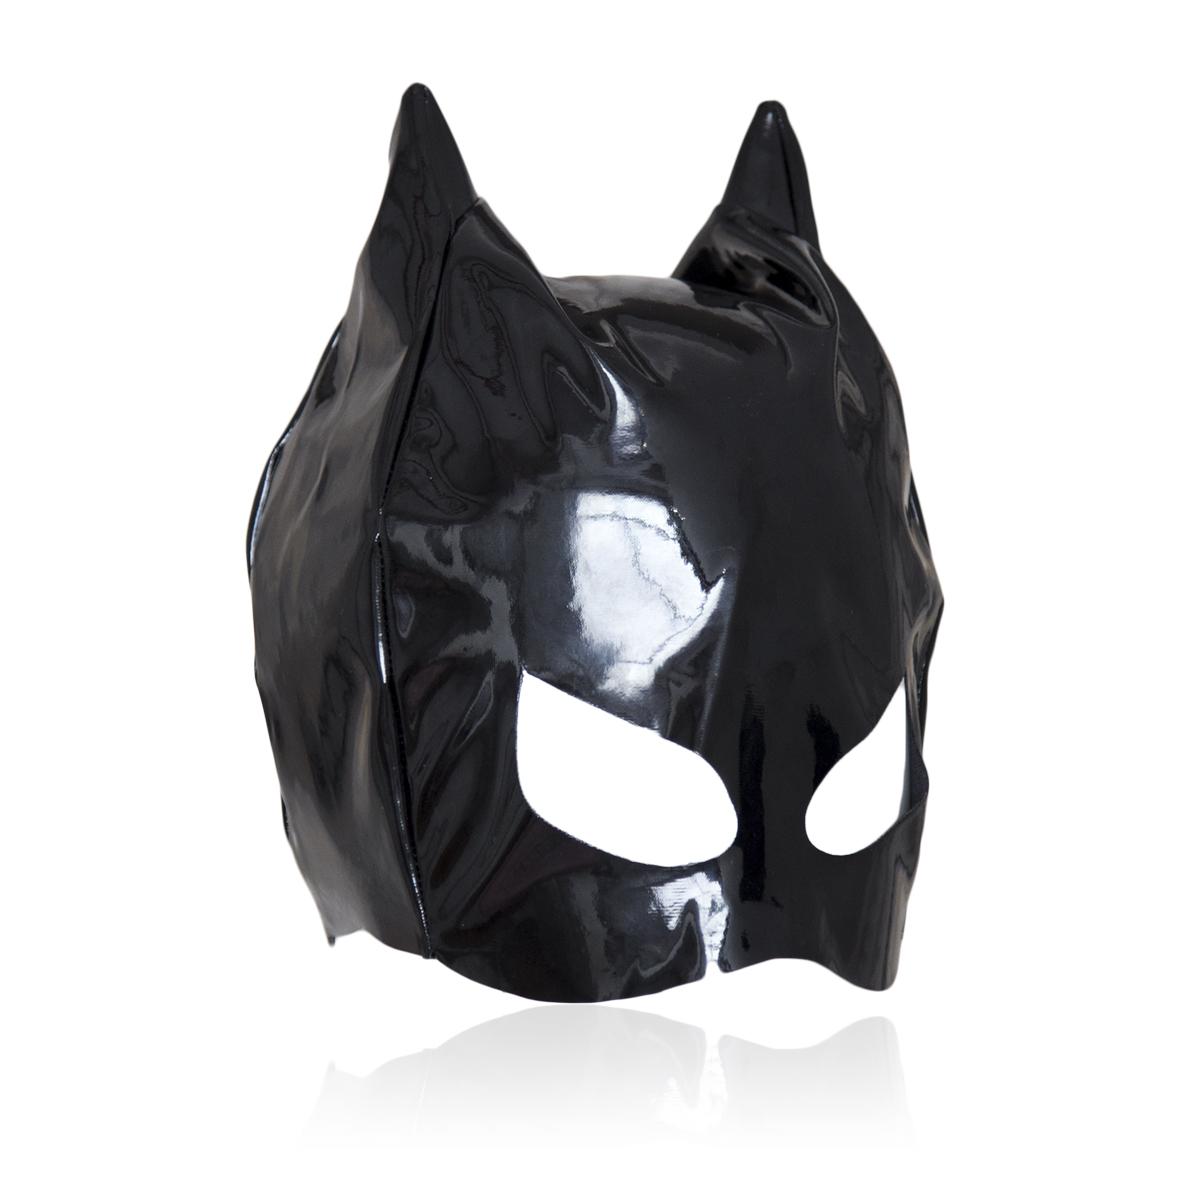 Pu Leather Sex Mask Fetish Hood Pussy Masks For Adult Game